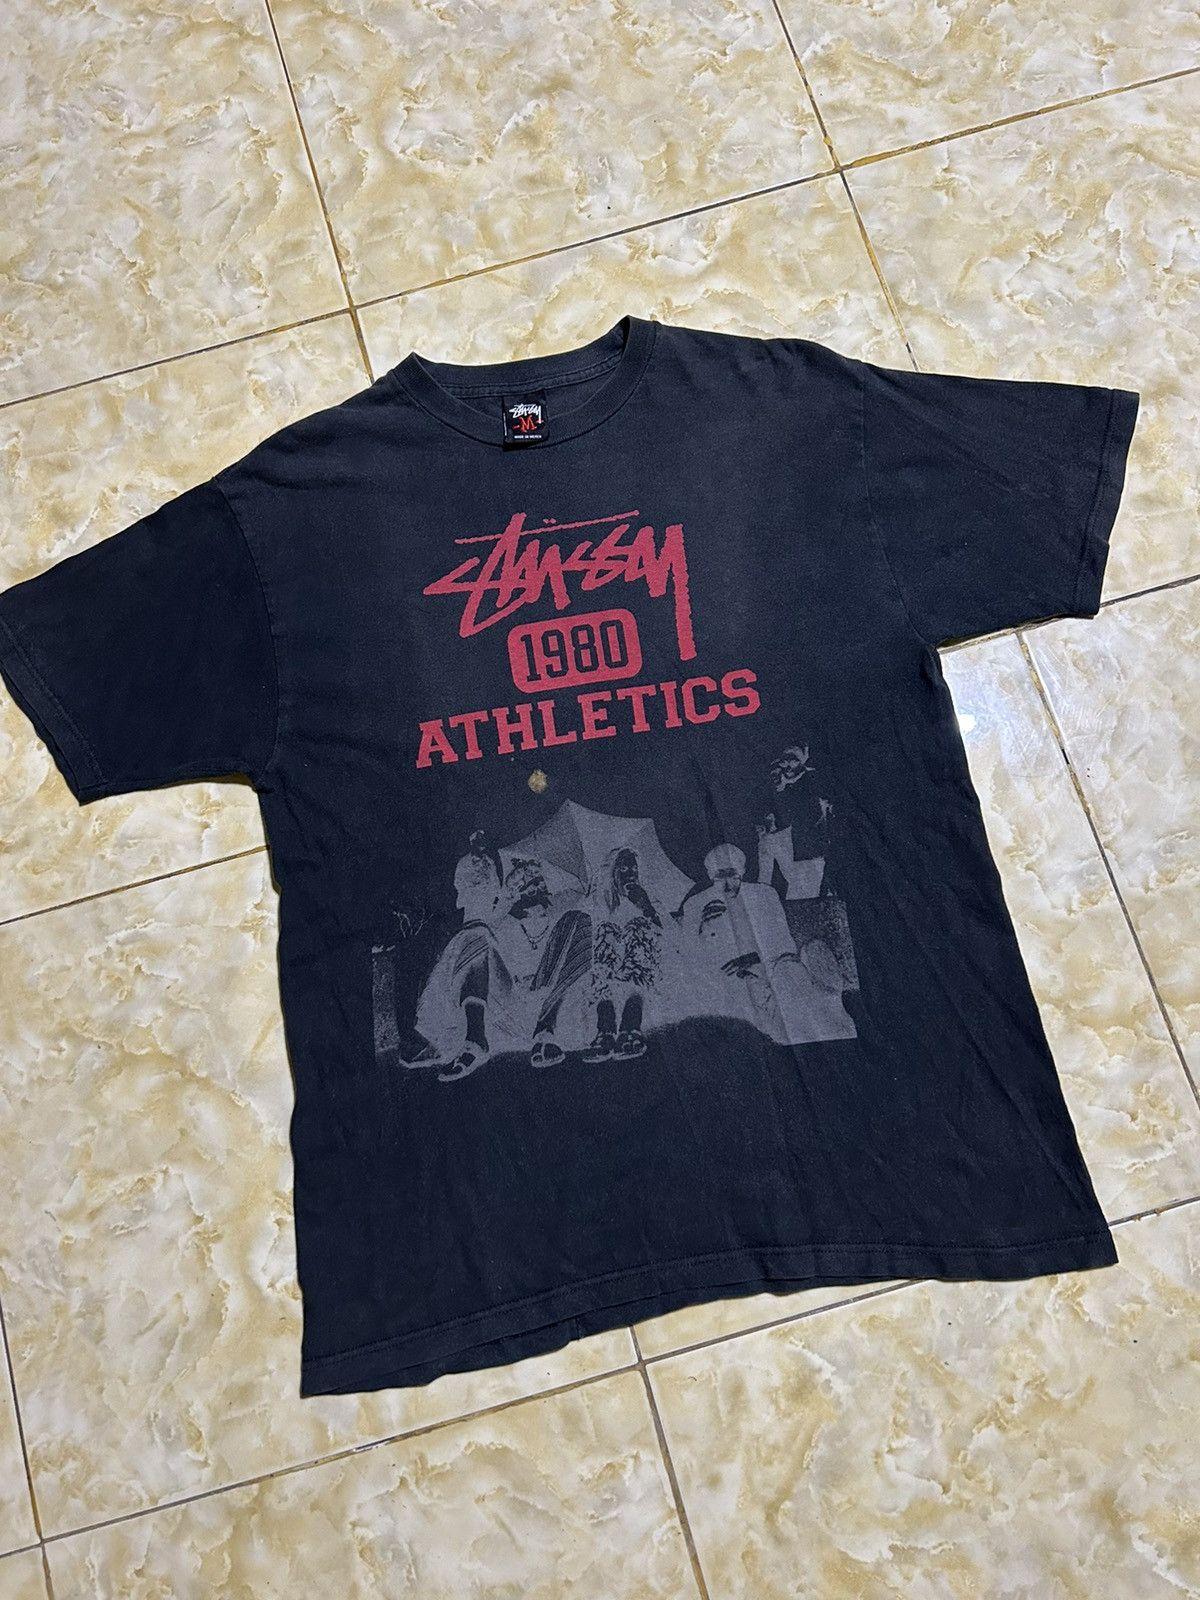 Stussy 1980 T Shirt | Grailed